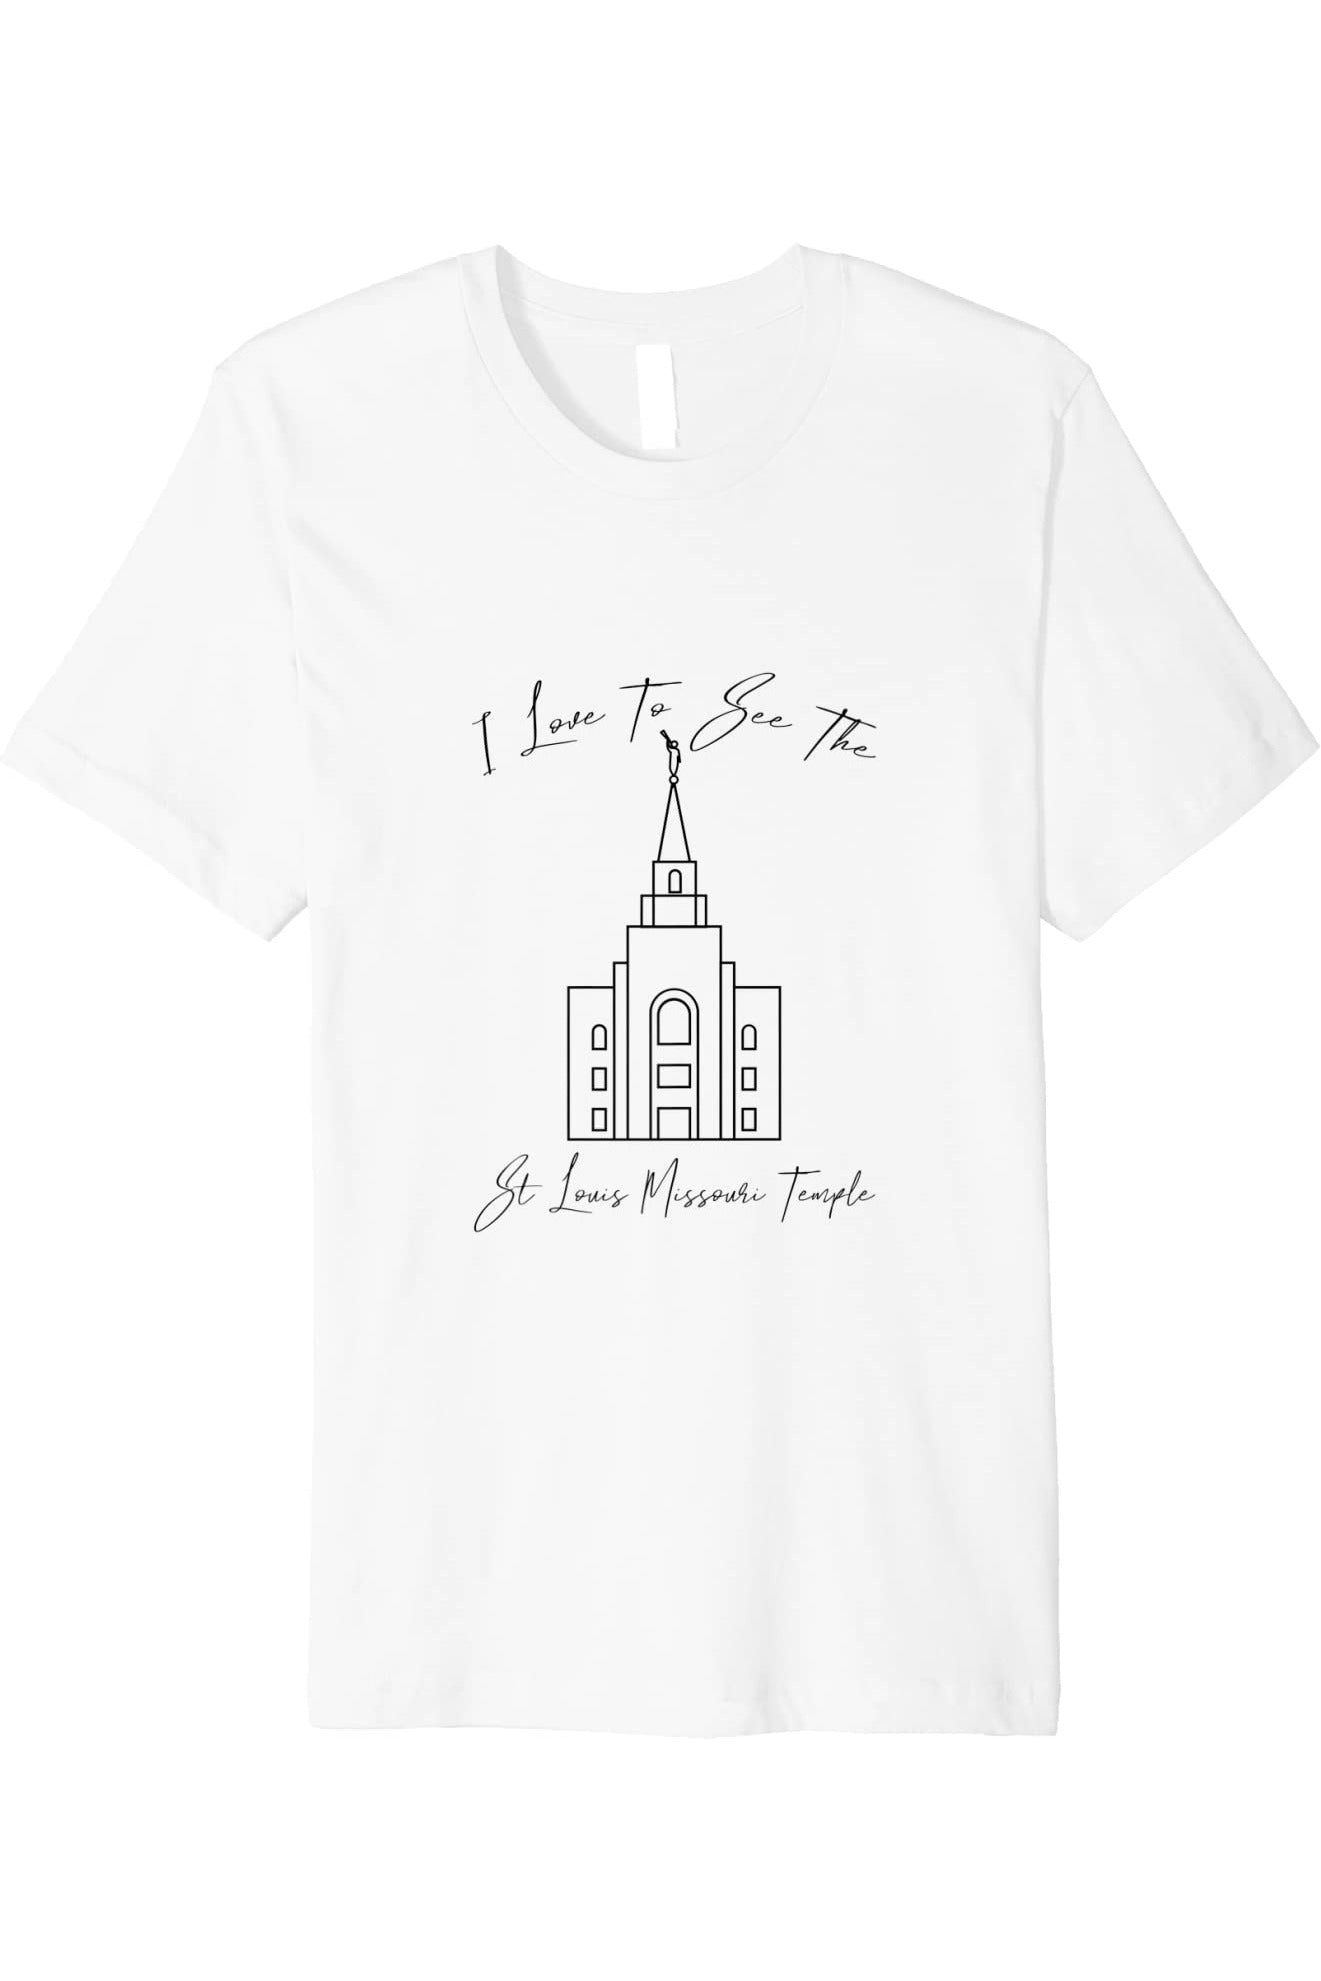 St Louis Missouri Temple T-Shirt - Premium - Calligraphy Style (English) US